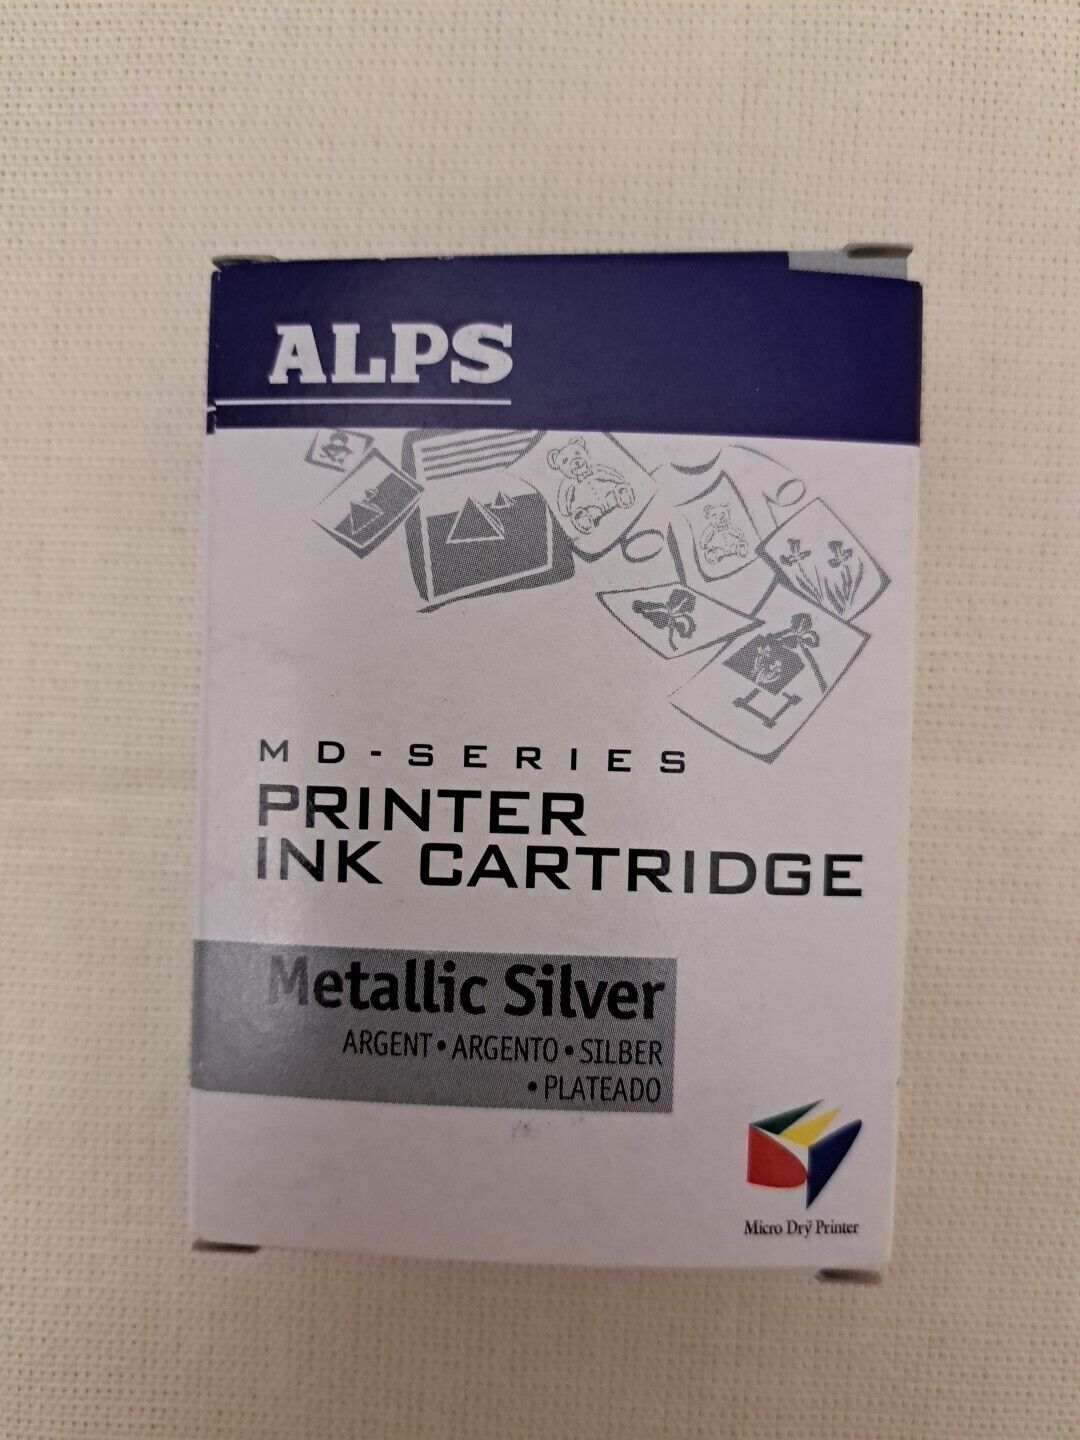 BRAND NEW ALPS Metalic Silver PRINTER INK CARTRIDGES MD SERIES